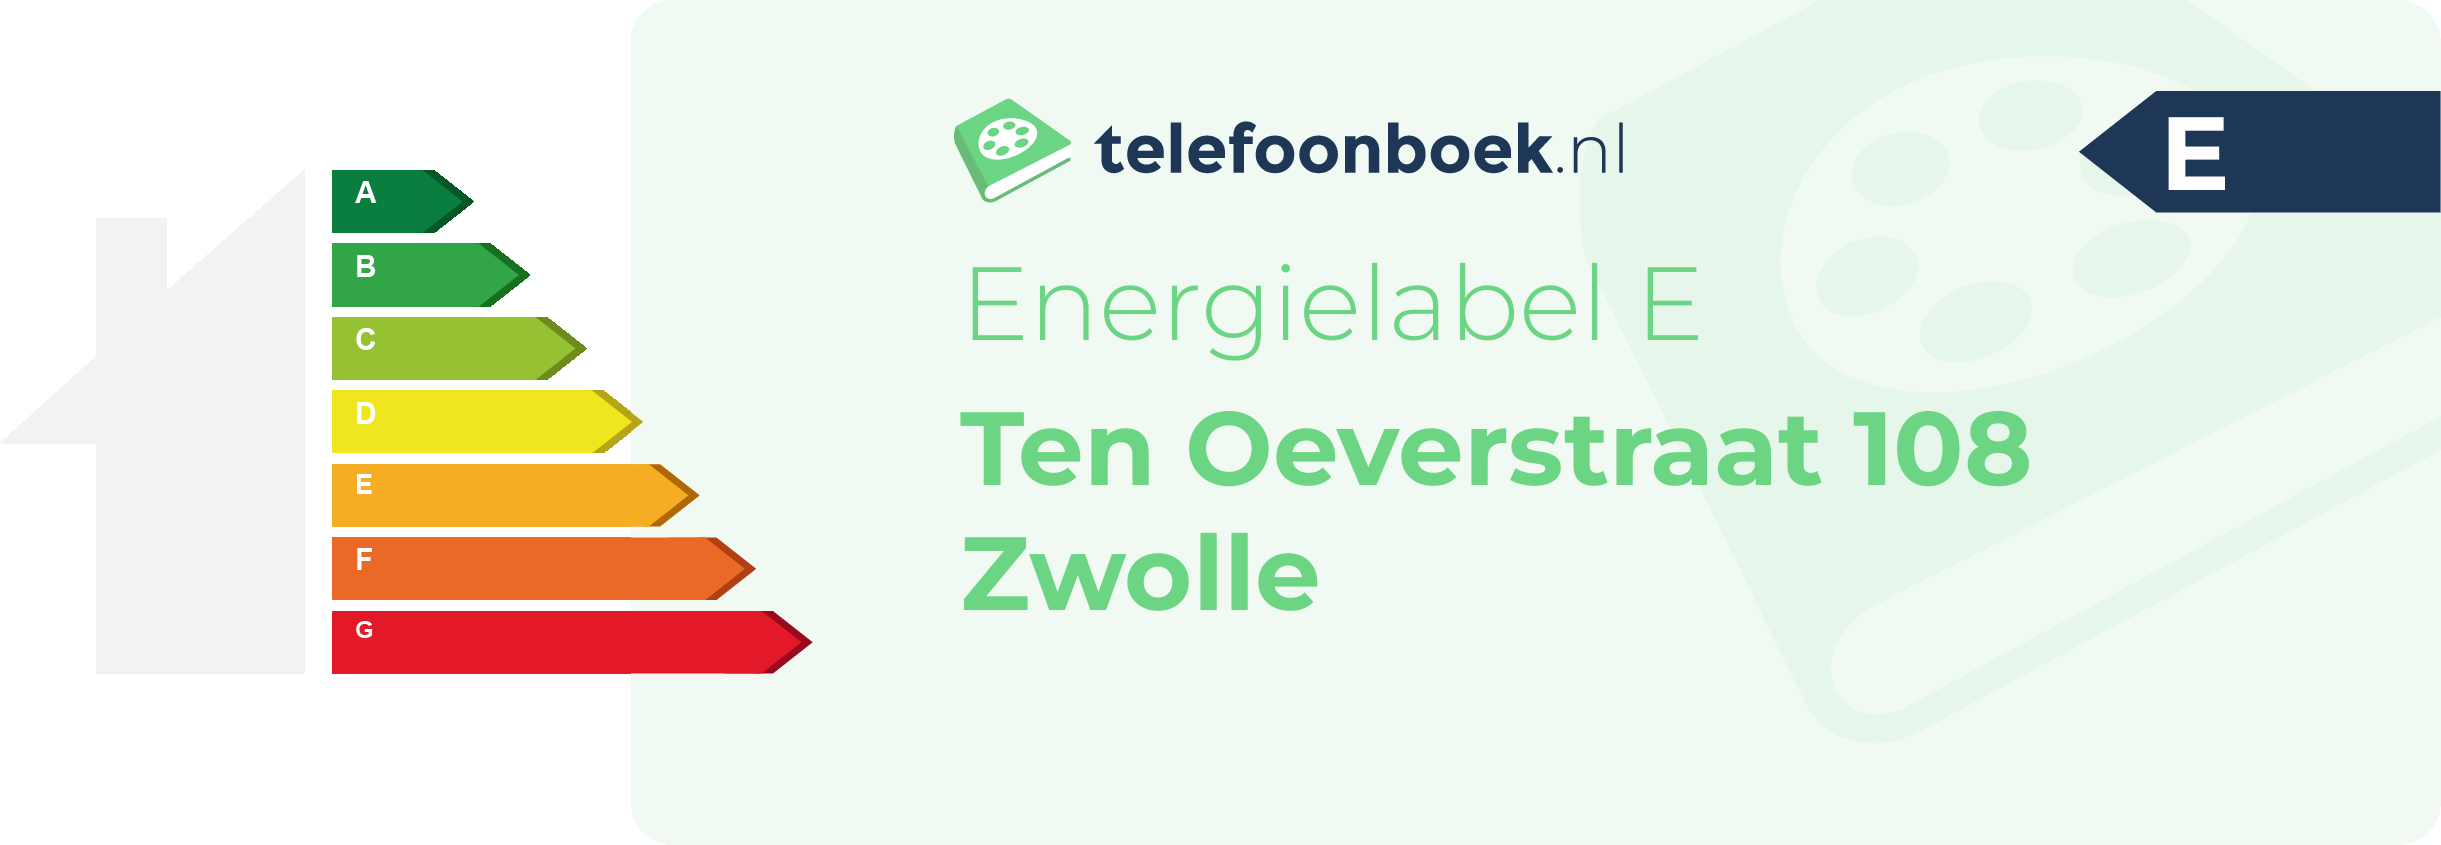 Energielabel Ten Oeverstraat 108 Zwolle